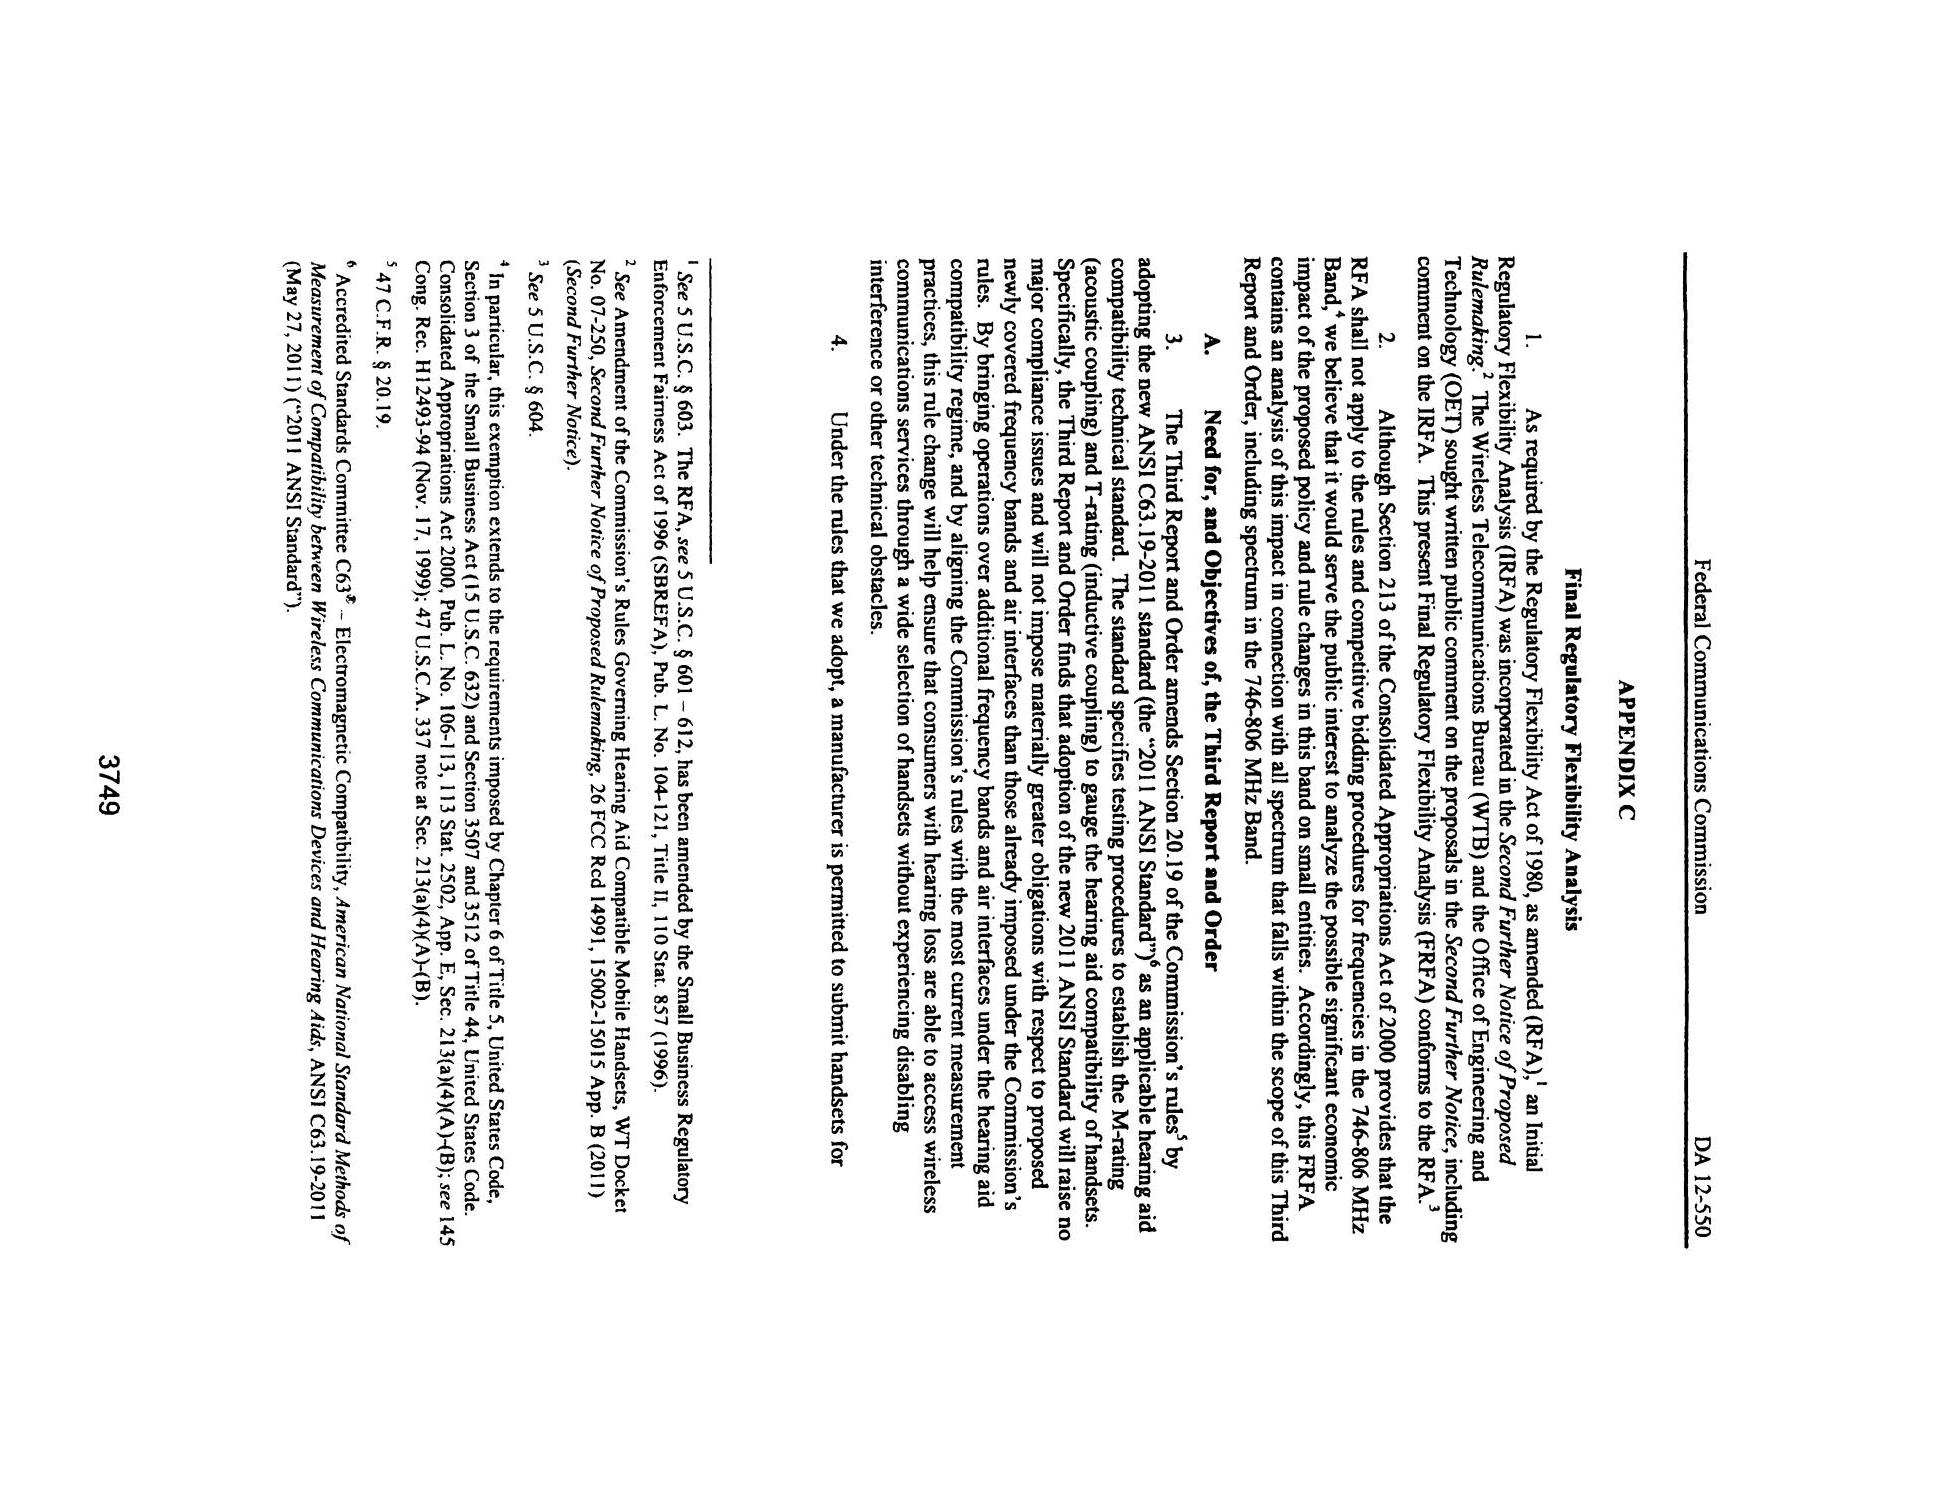 FCC Record, Volume 27, No. 5, Pages 3728 to 4696, April 9 - April 27, 2012
                                                
                                                    3749
                                                